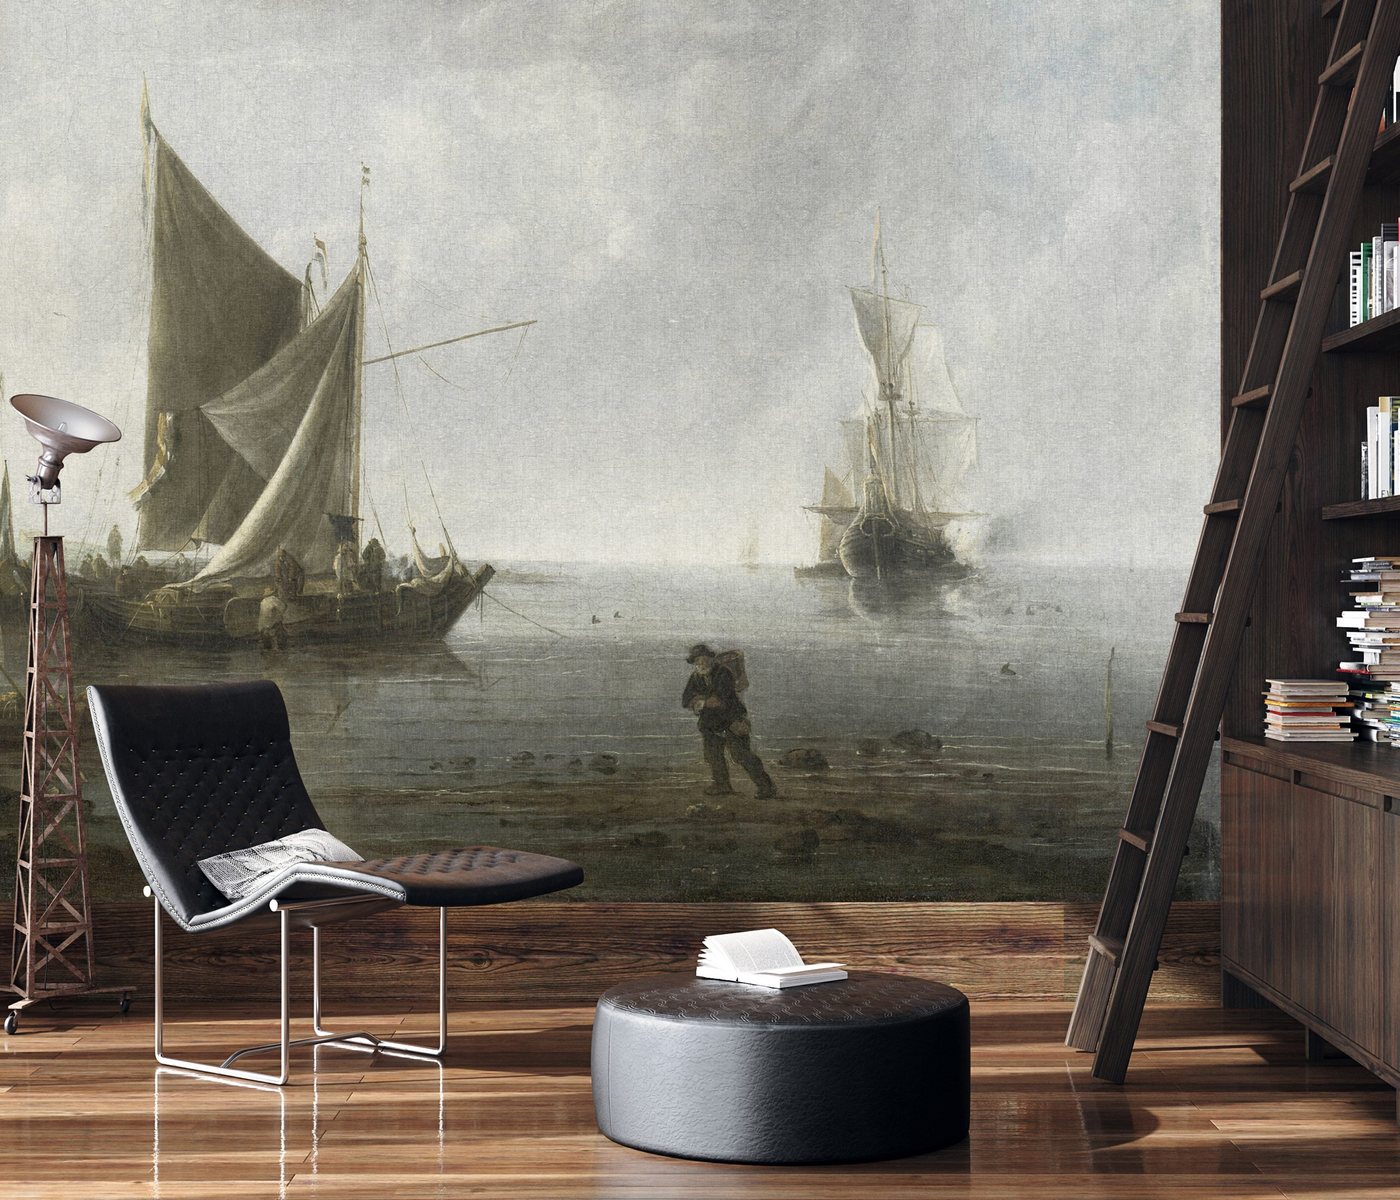 Newroom Vliestapete, [ 3,5 x 2,7 m ] großzügiges Motiv - kein wiederkehrendes Muster - Fototapete Wandbild Segelschiffe Meer Boote Made in Germany von Newroom